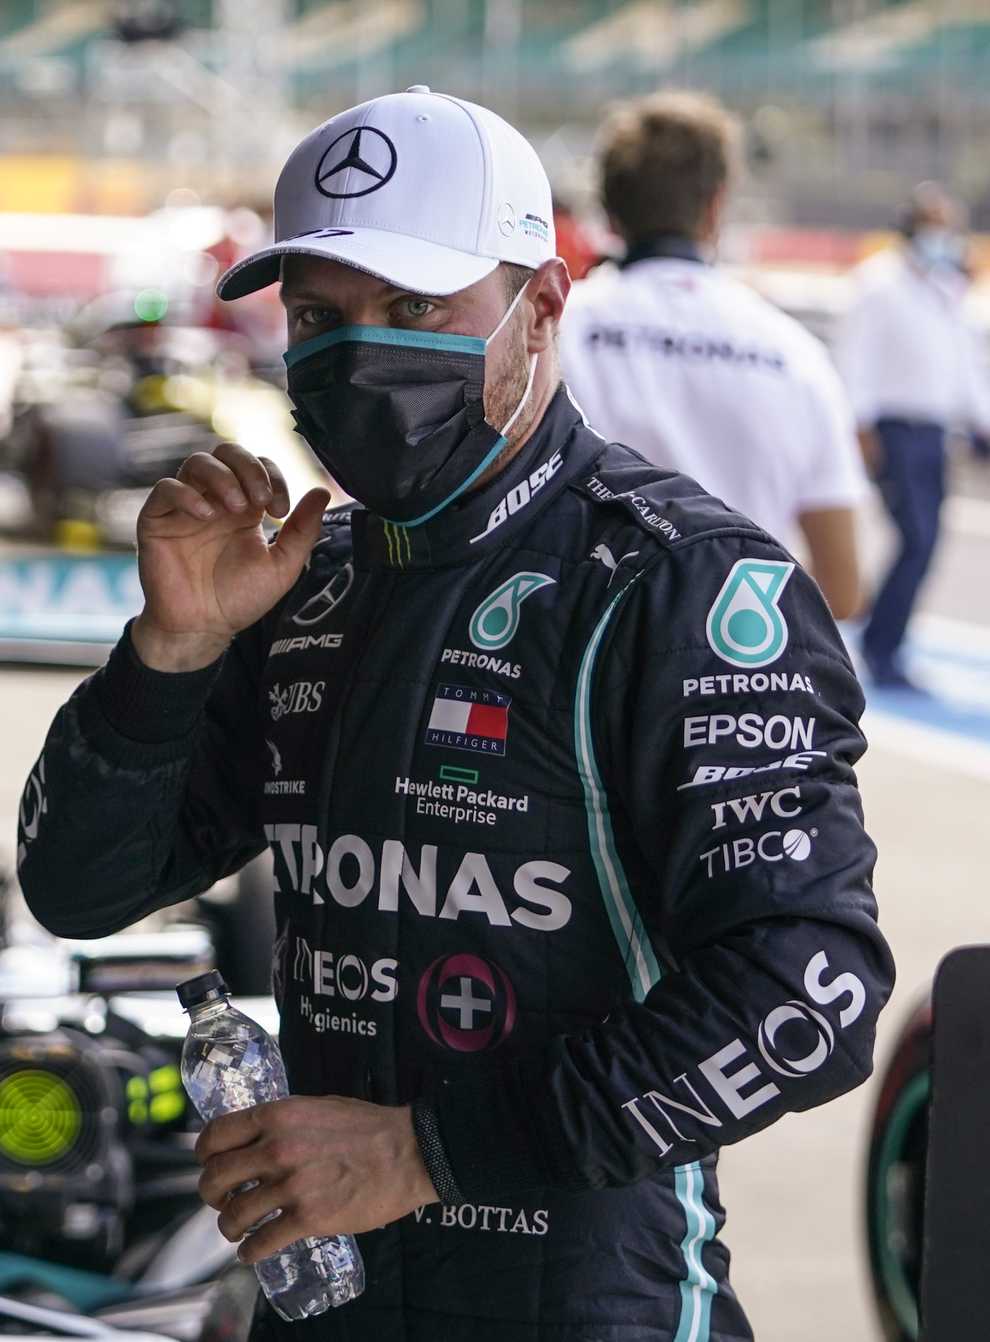 Valtteri Bottas will drive for Mercedes again next year